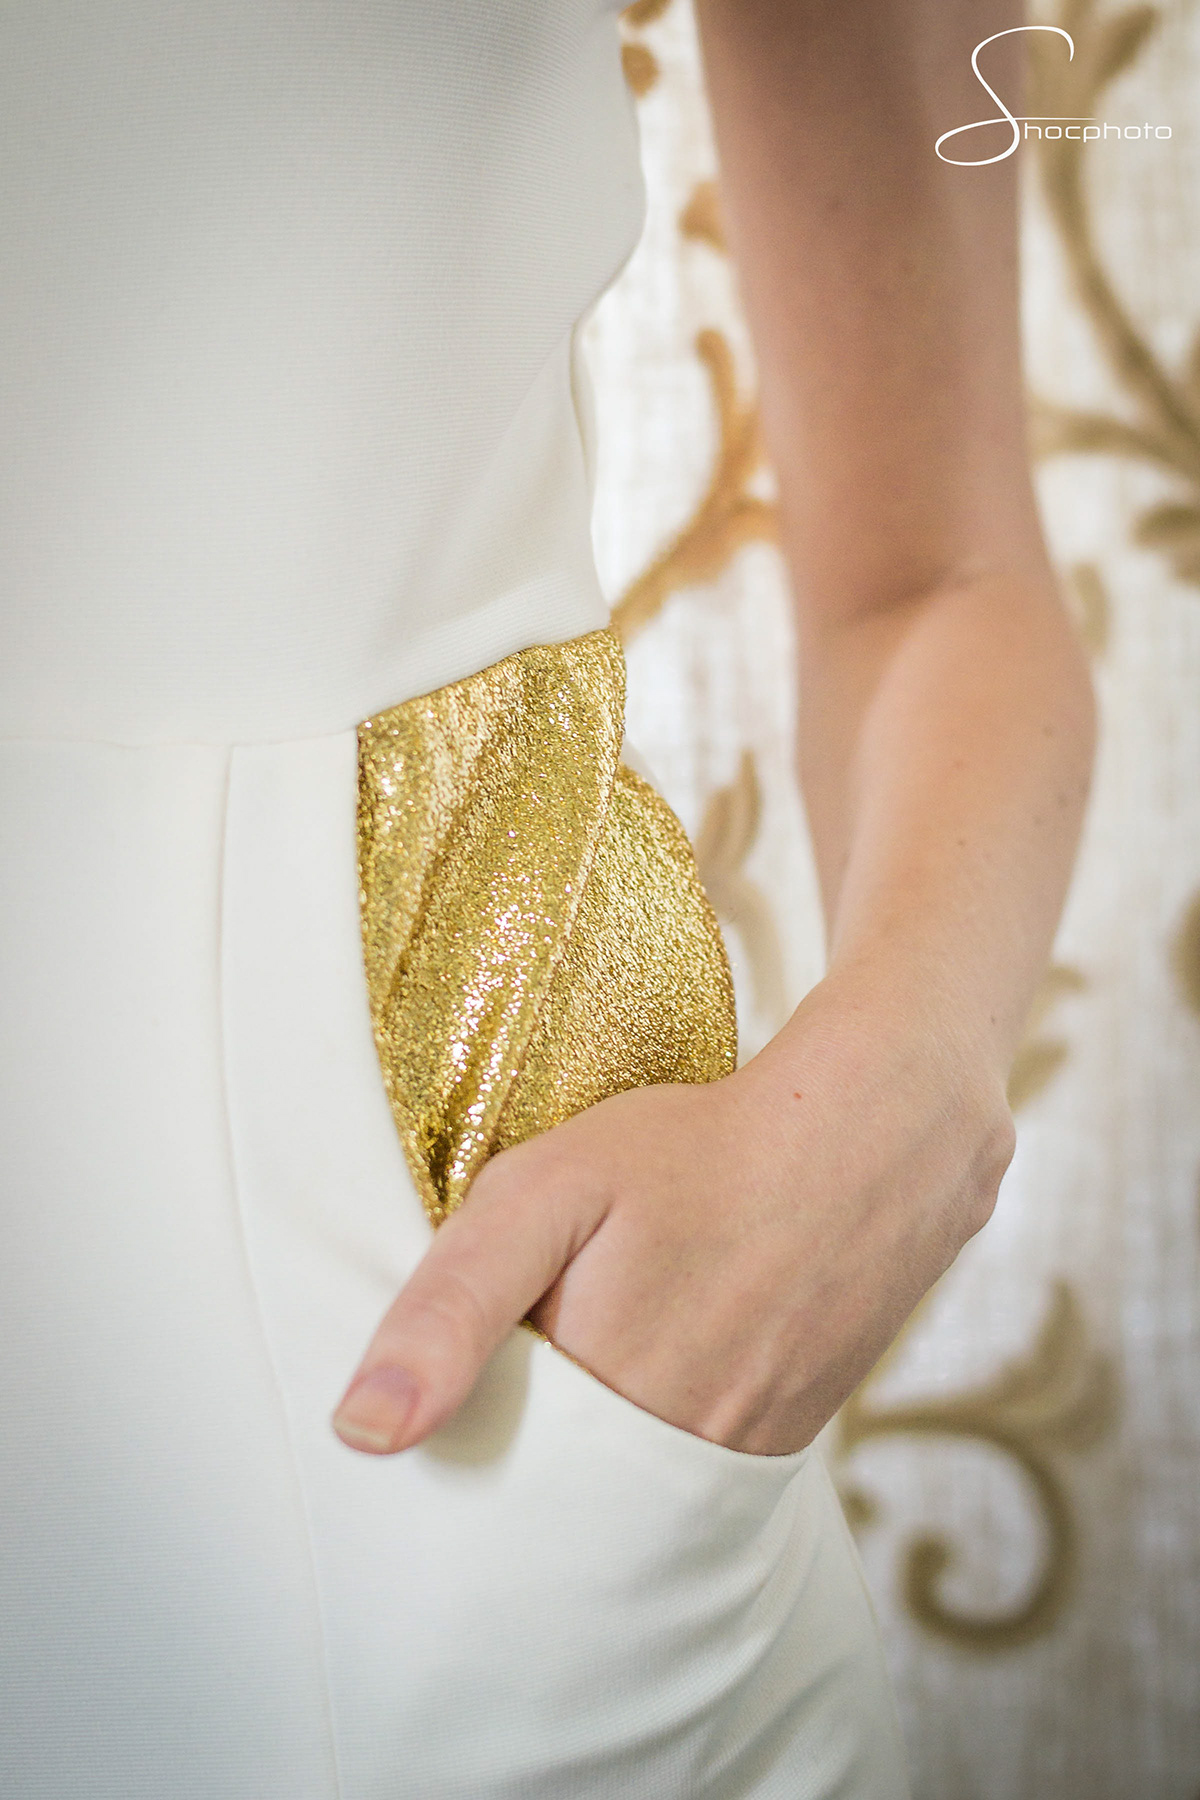 SCAD lacoste france design shocphoto designer dresses Glitter jumpsuit yellow White gold